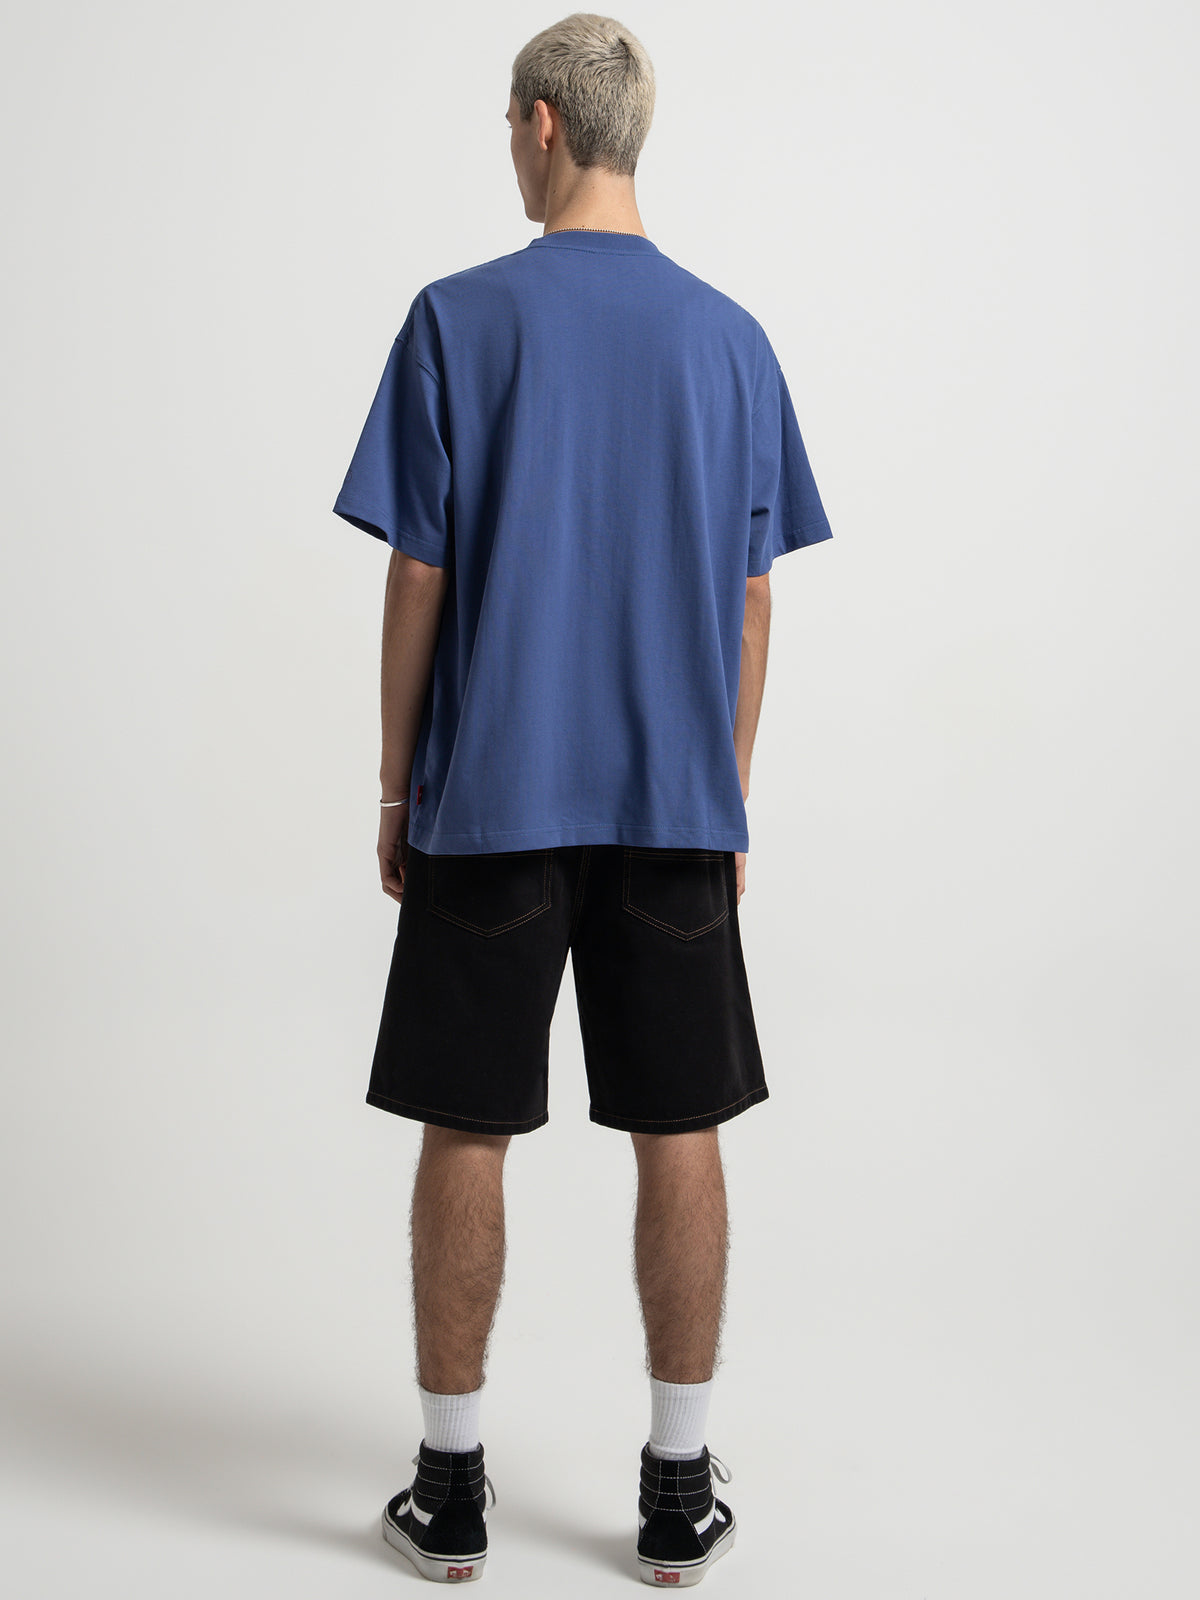 Furball T-Shirt in Cobalt